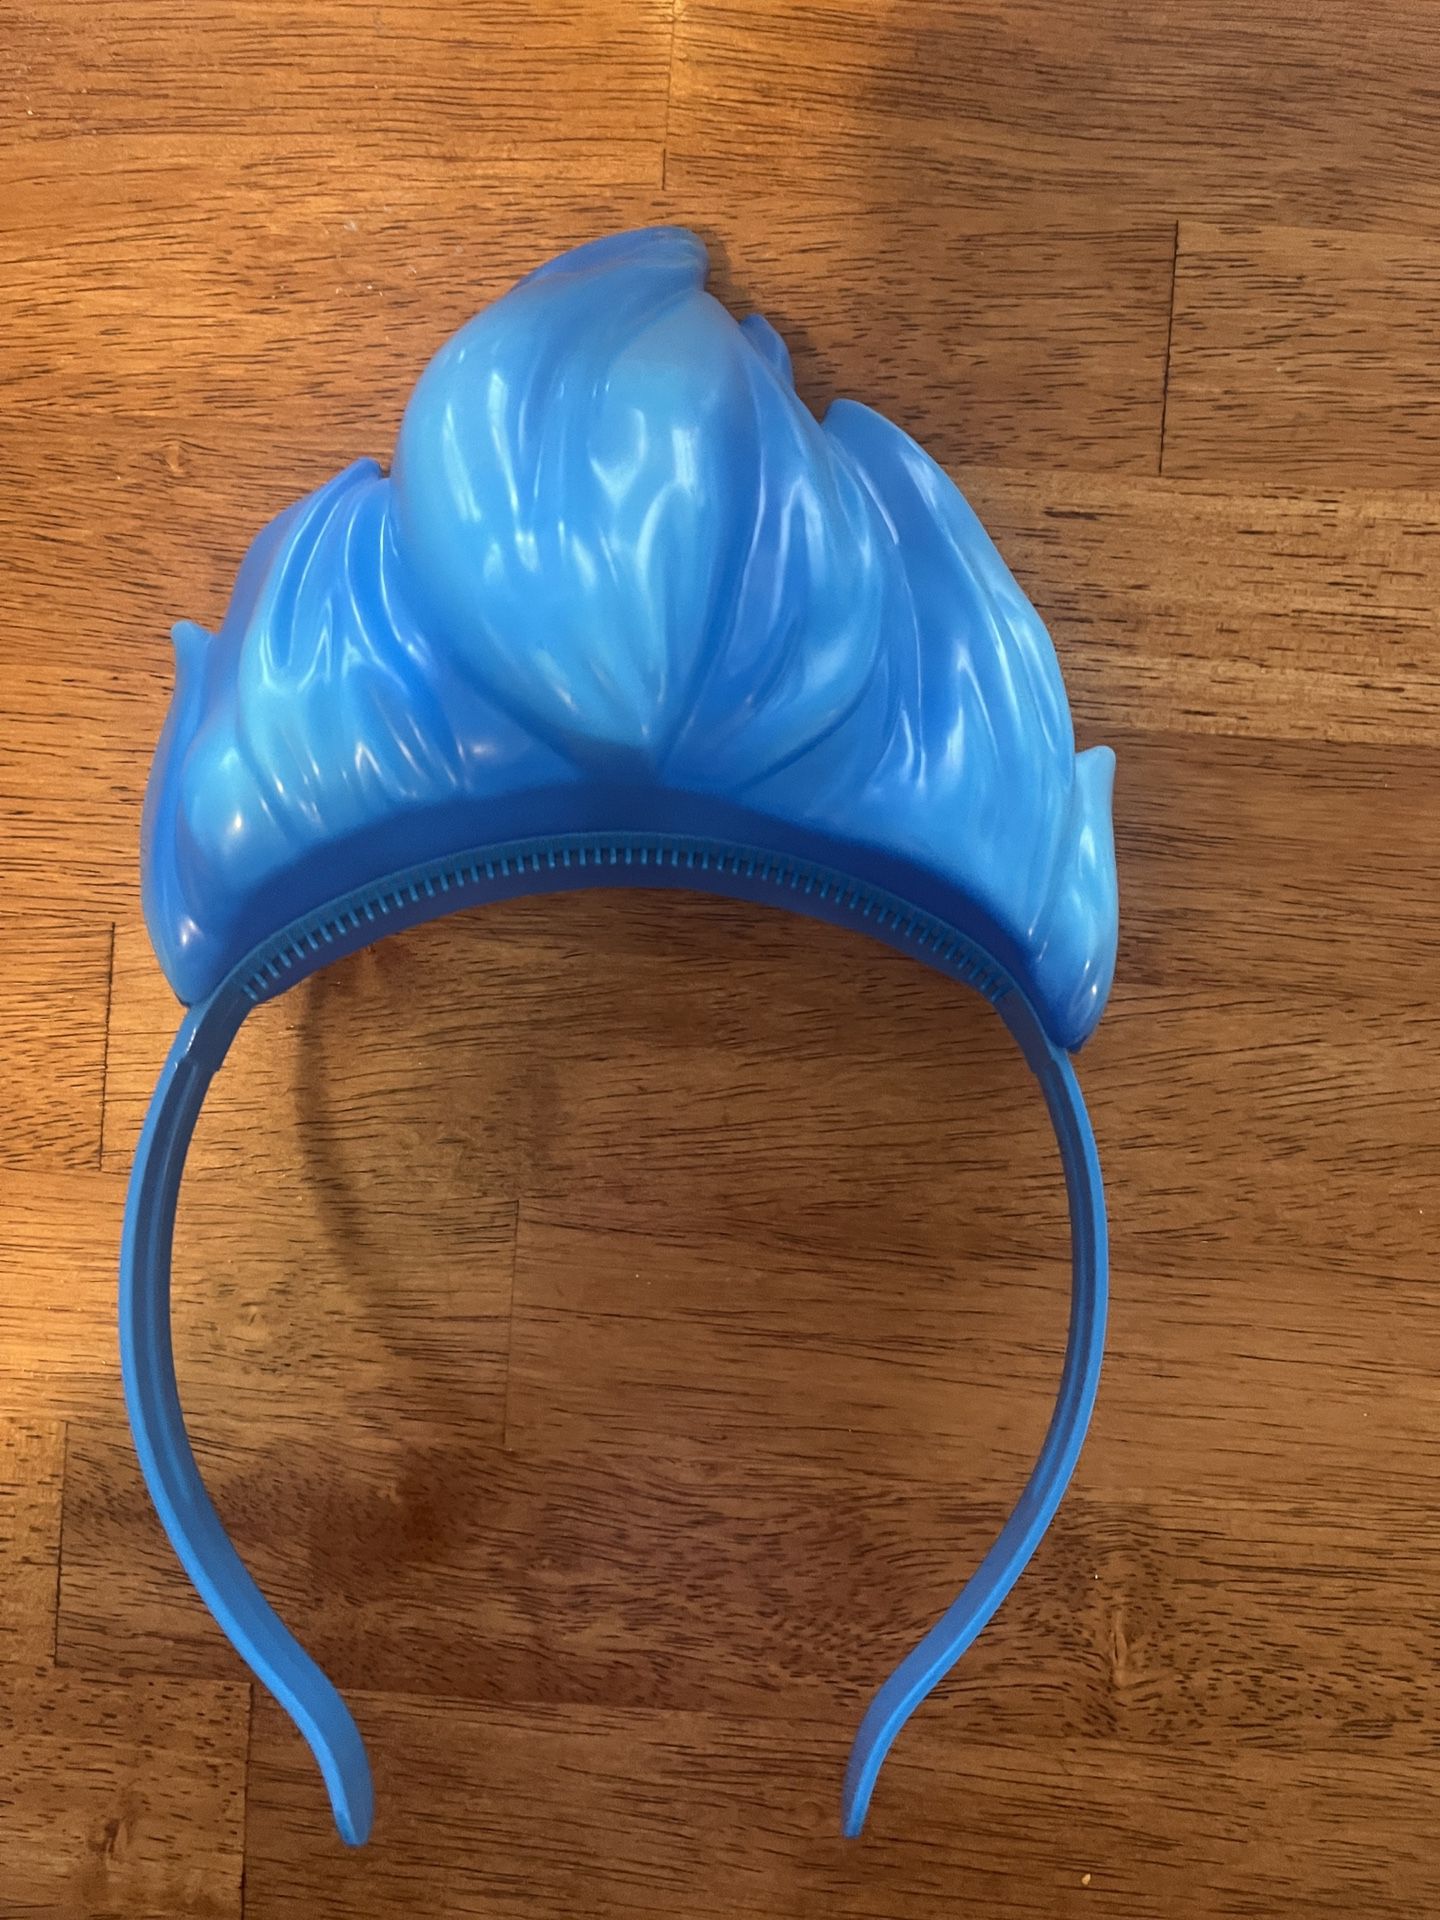 Disney Parks Hercules Light Up Hades Flames Plastic Ears Headband NWOT